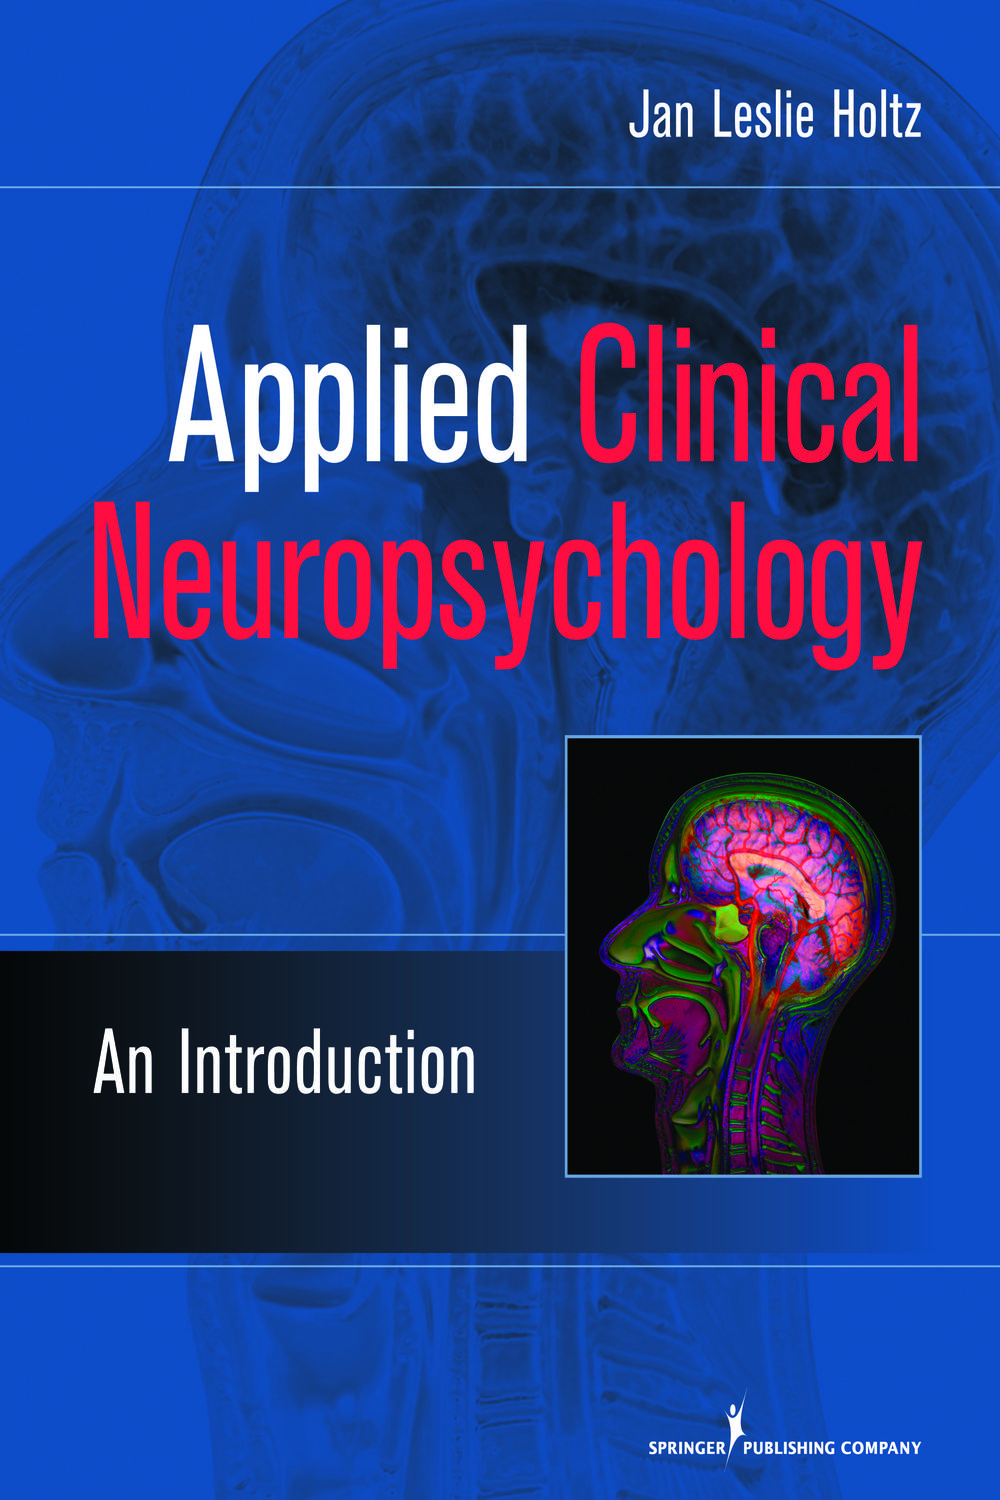 Applied Clinical Neuropsychology - Jan Leslie Holtz, PhD